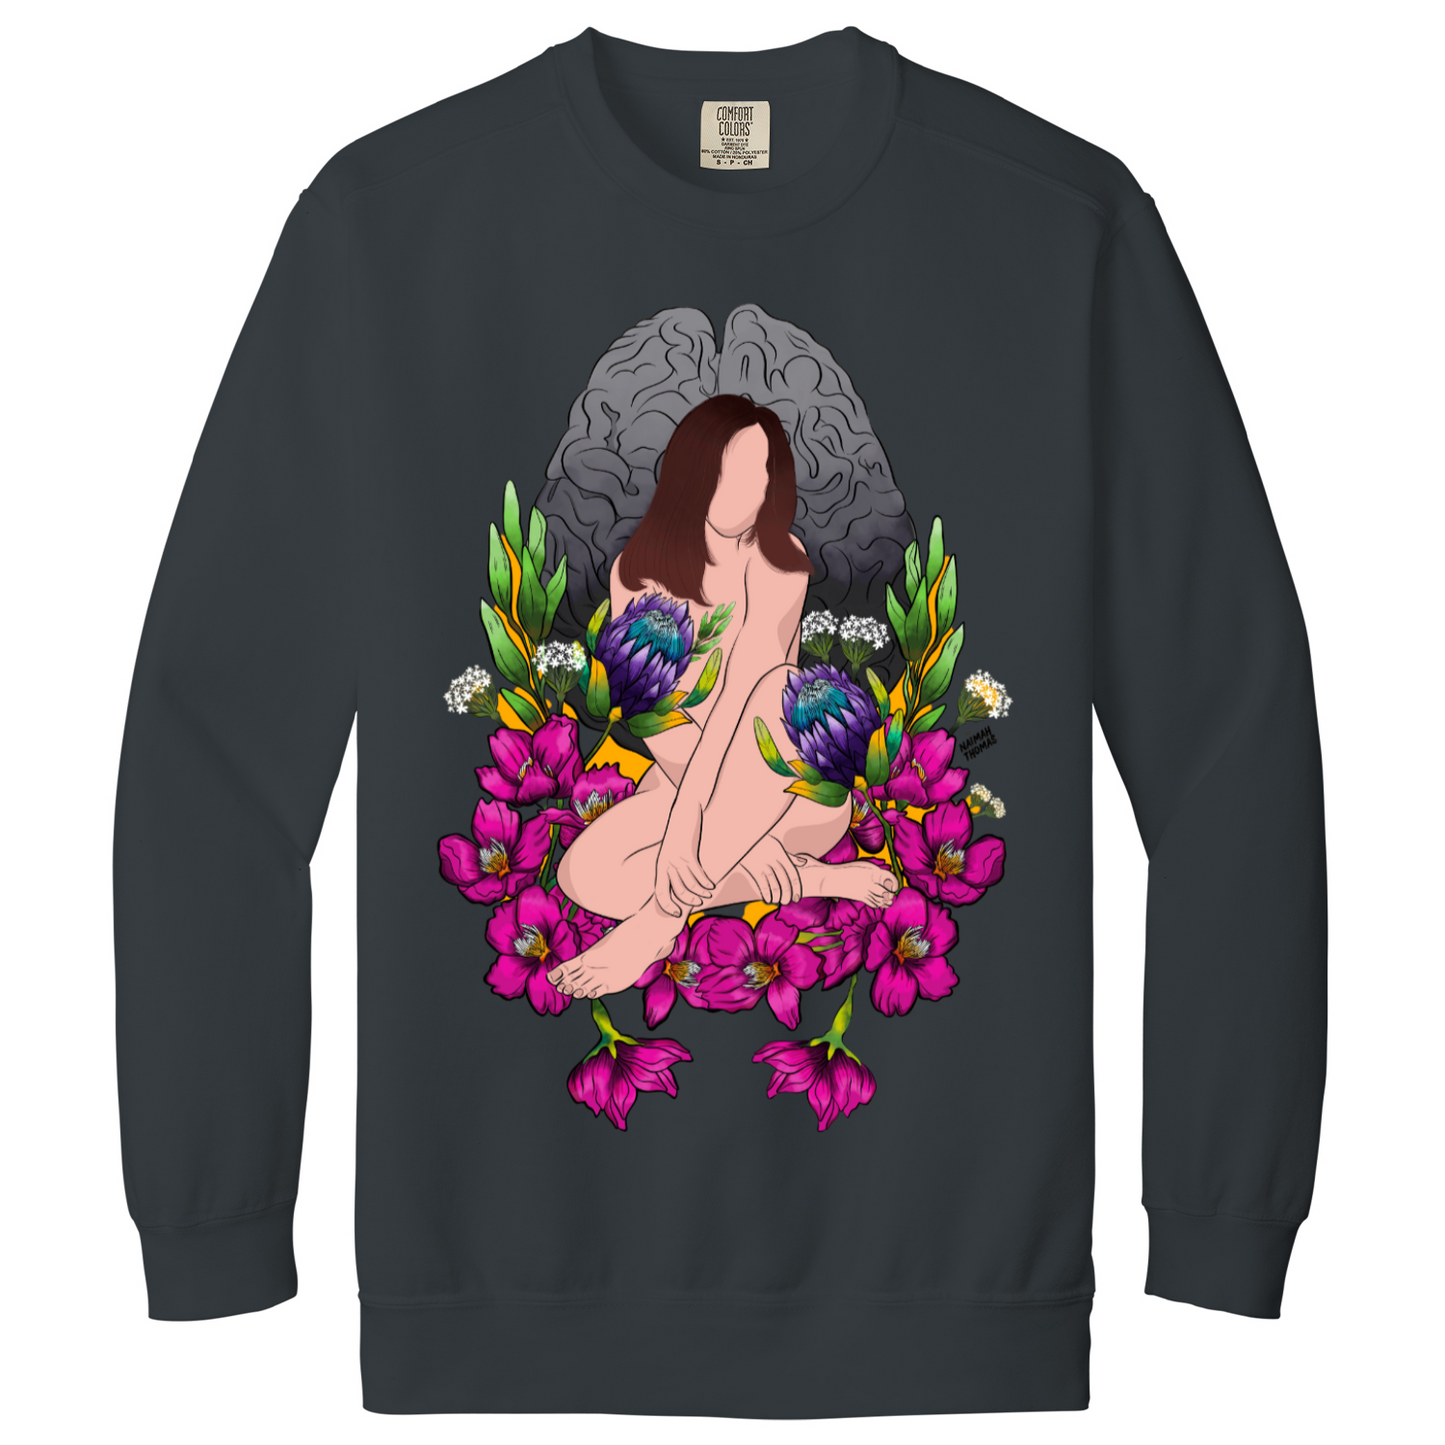 "Wandering amongst the cherry blossoms" Unisex Sweatshirt